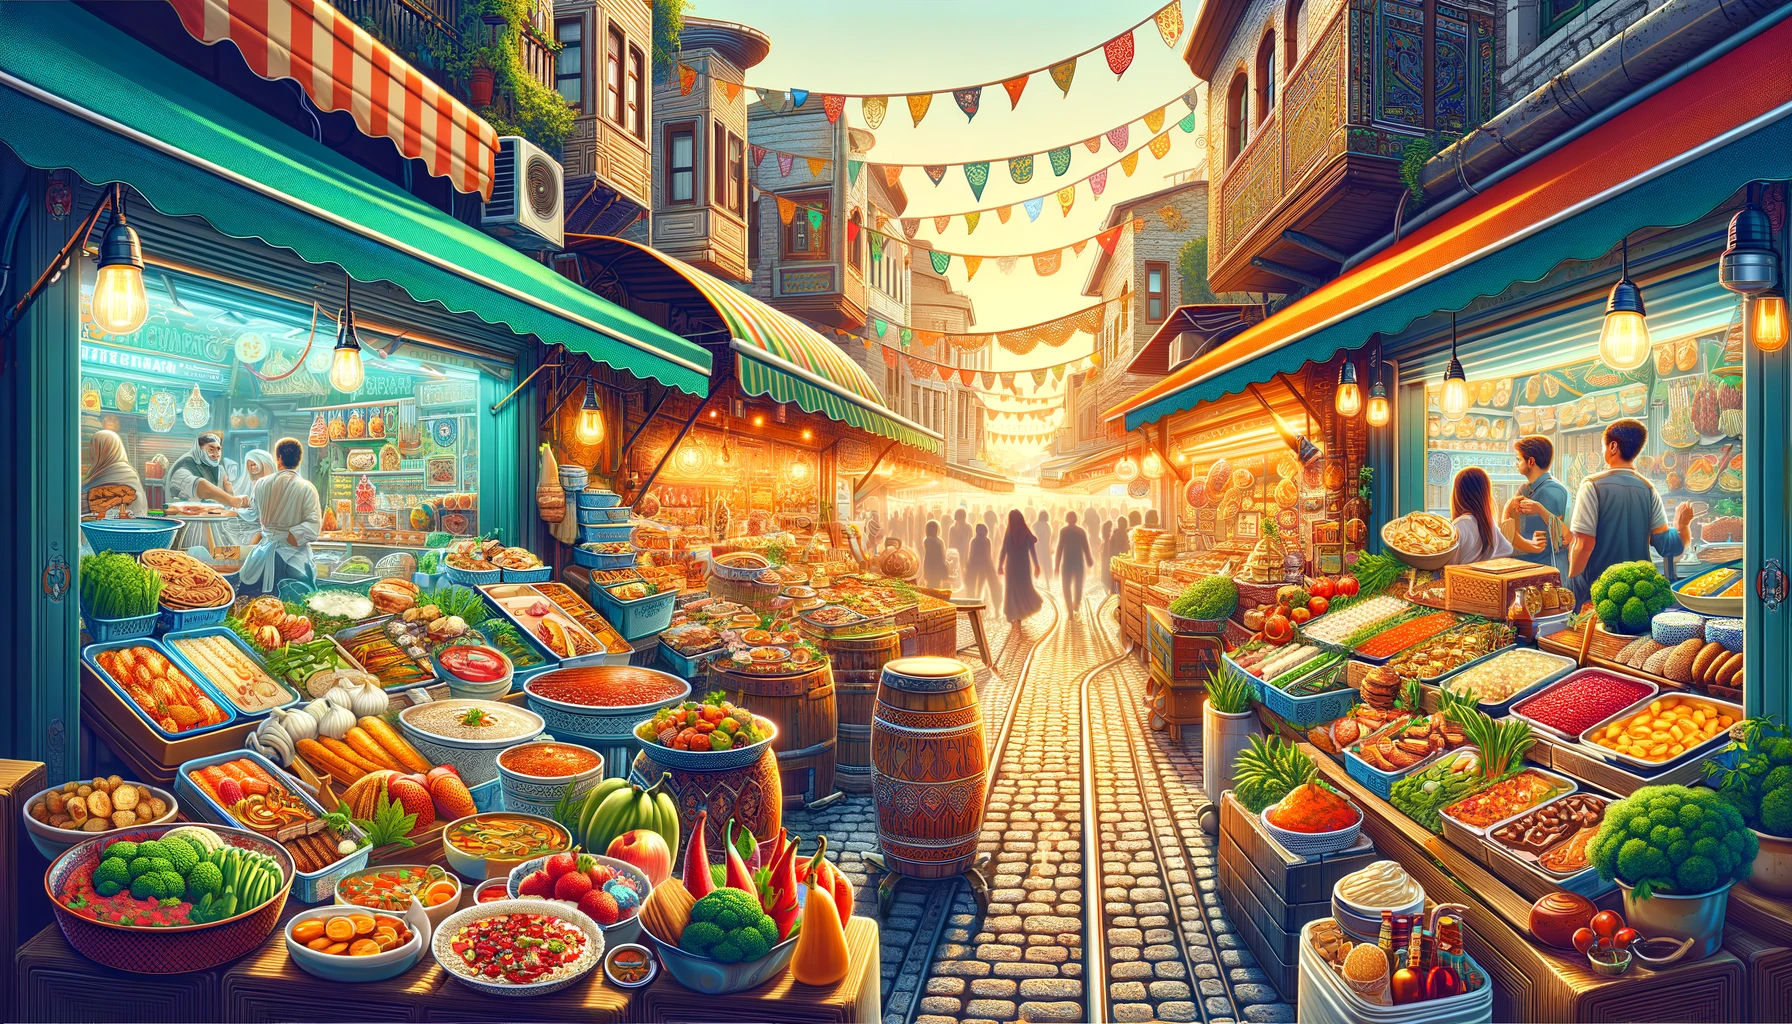 An illustration of a market with people enjoying Turkish street food.